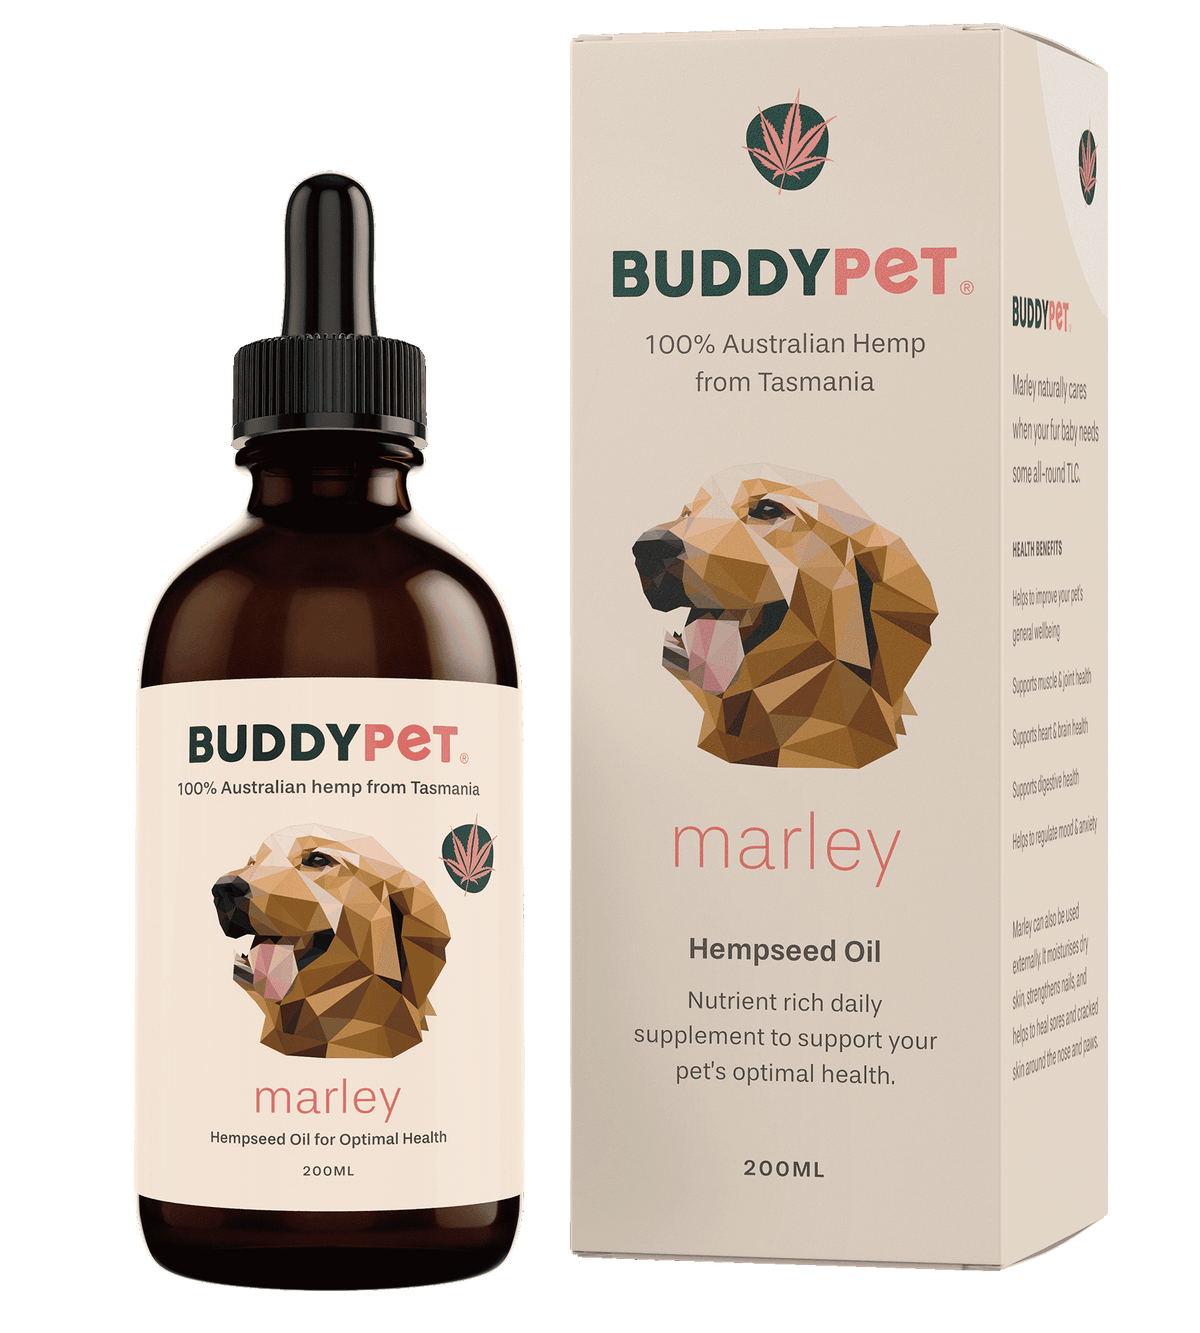 BUDDYPET Marley hemp seed oil